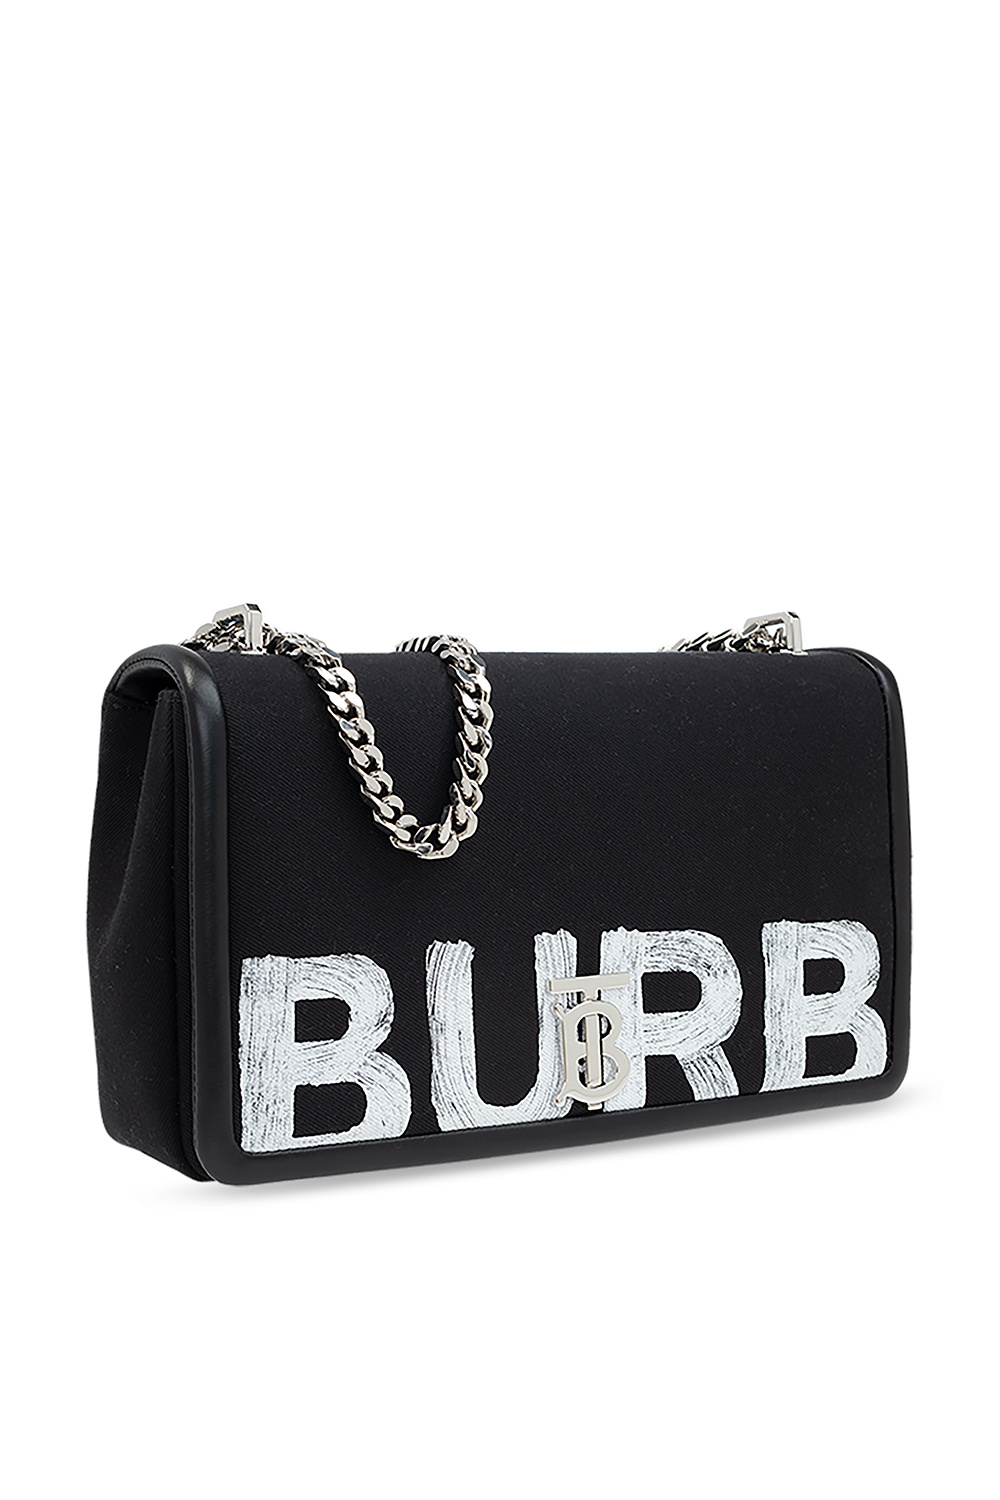 Burberry: Orange Cube Bag Charm Keychain